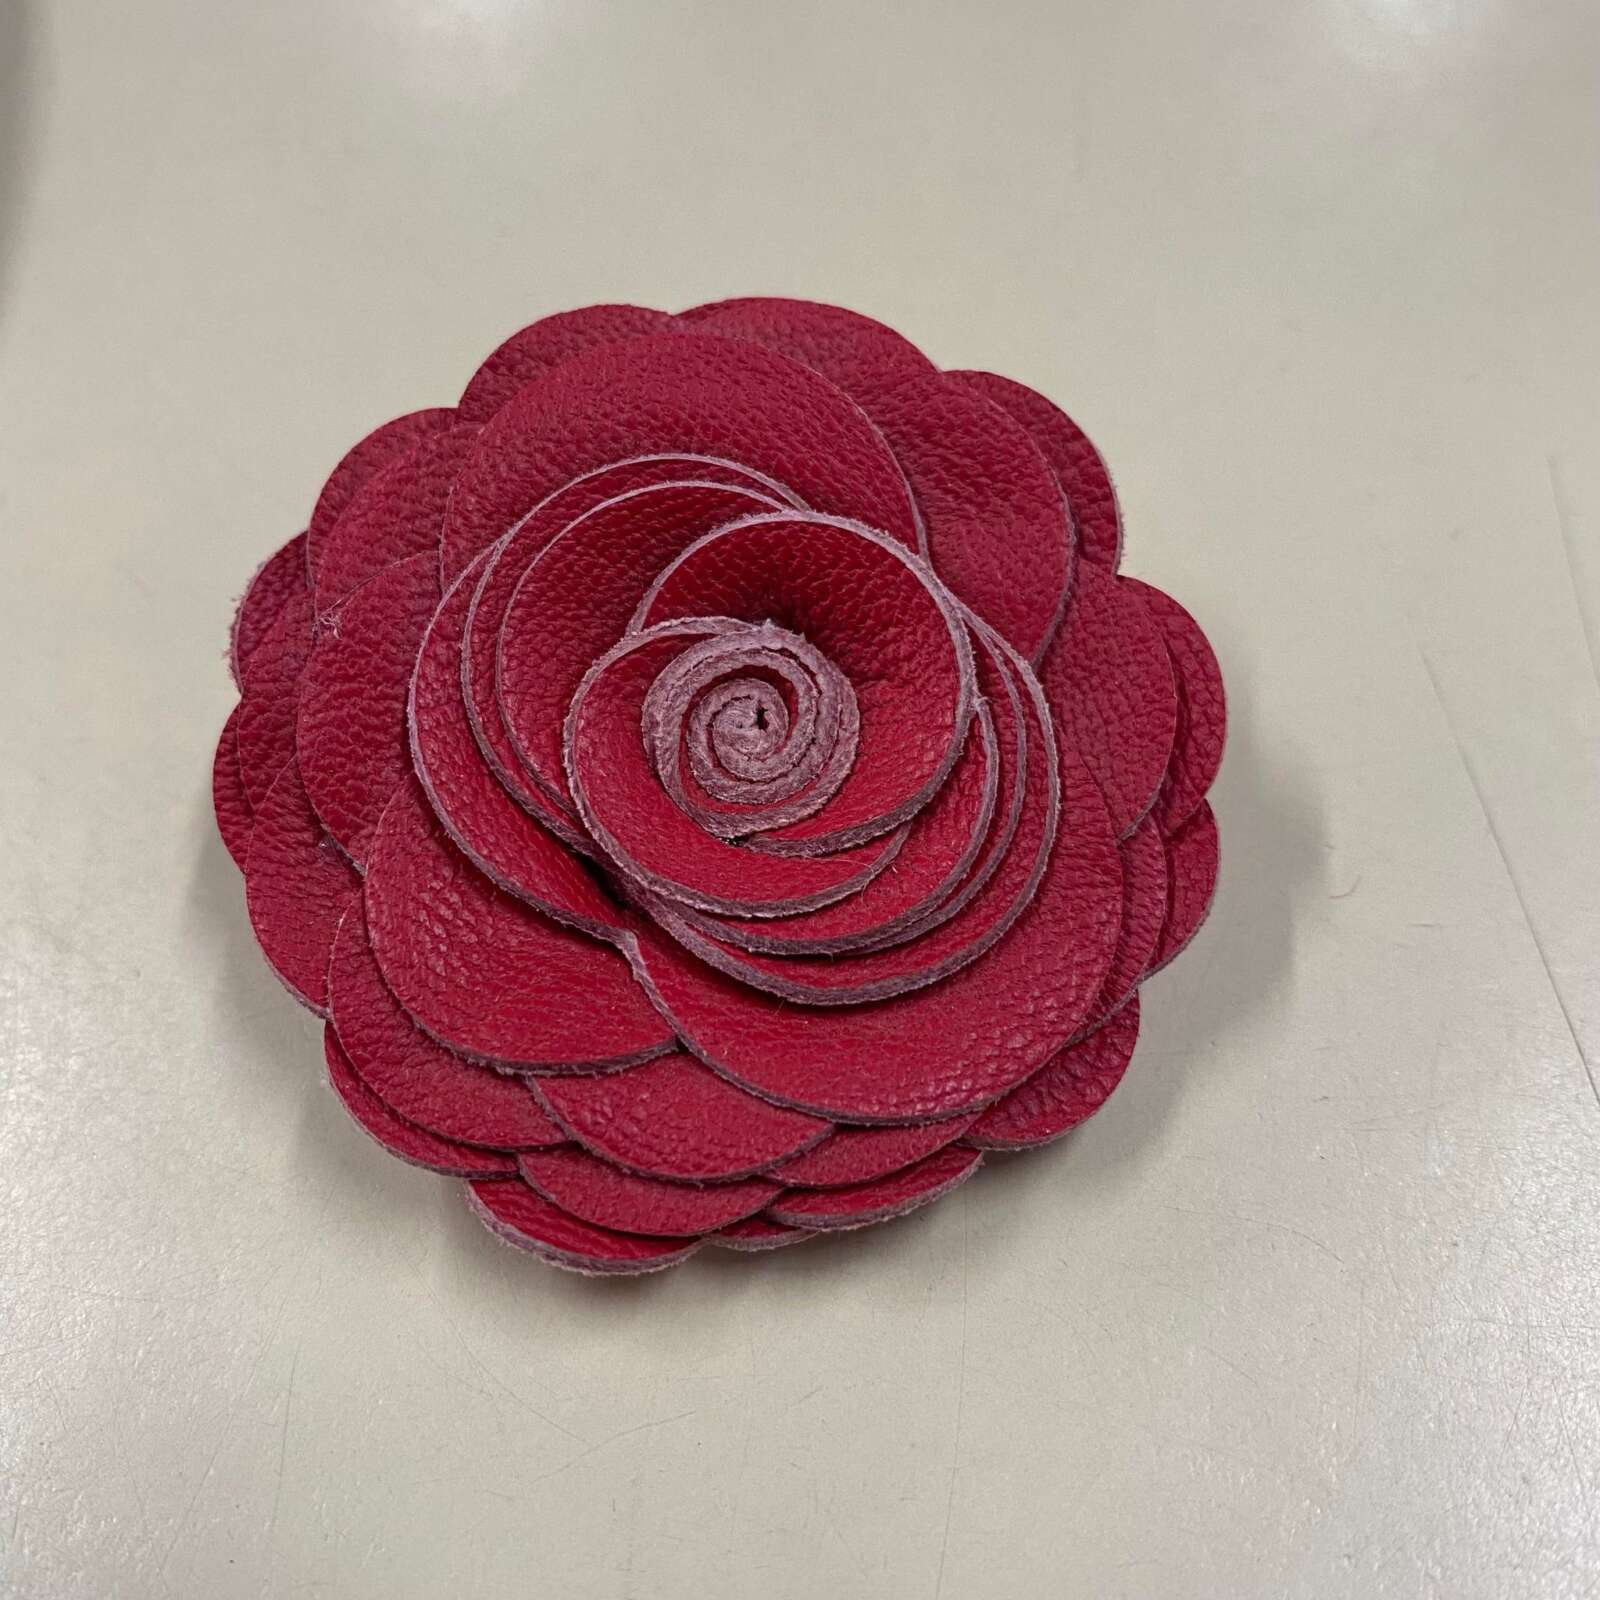 La Lapel – Leather Rose Lapel Pin RED